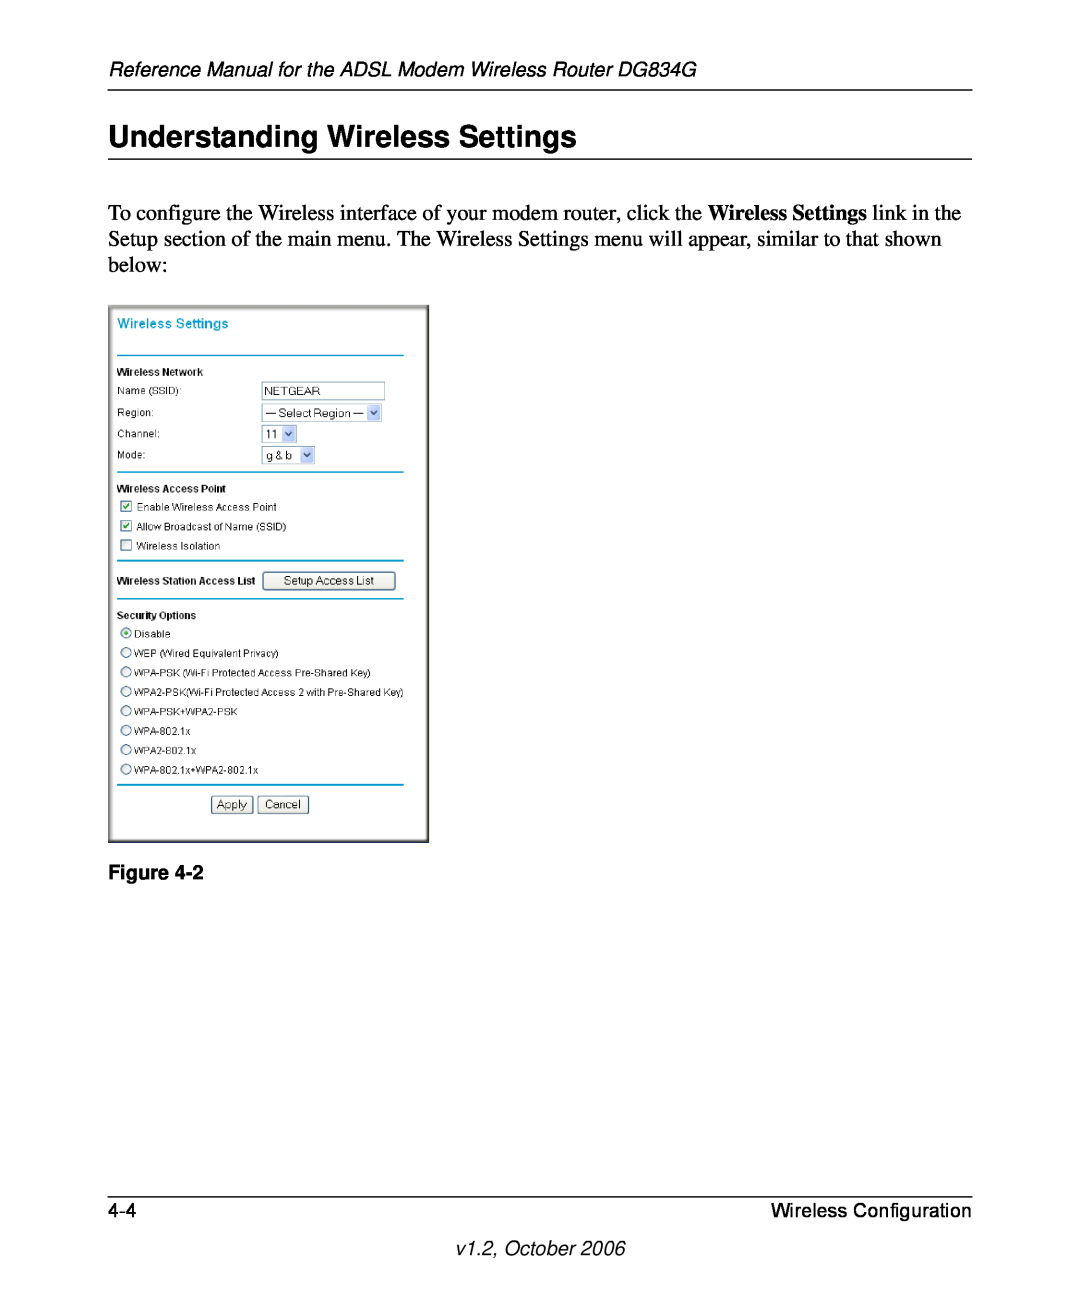 NETGEAR Understanding Wireless Settings, Reference Manual for the ADSL Modem Wireless Router DG834G, v1.2, October 